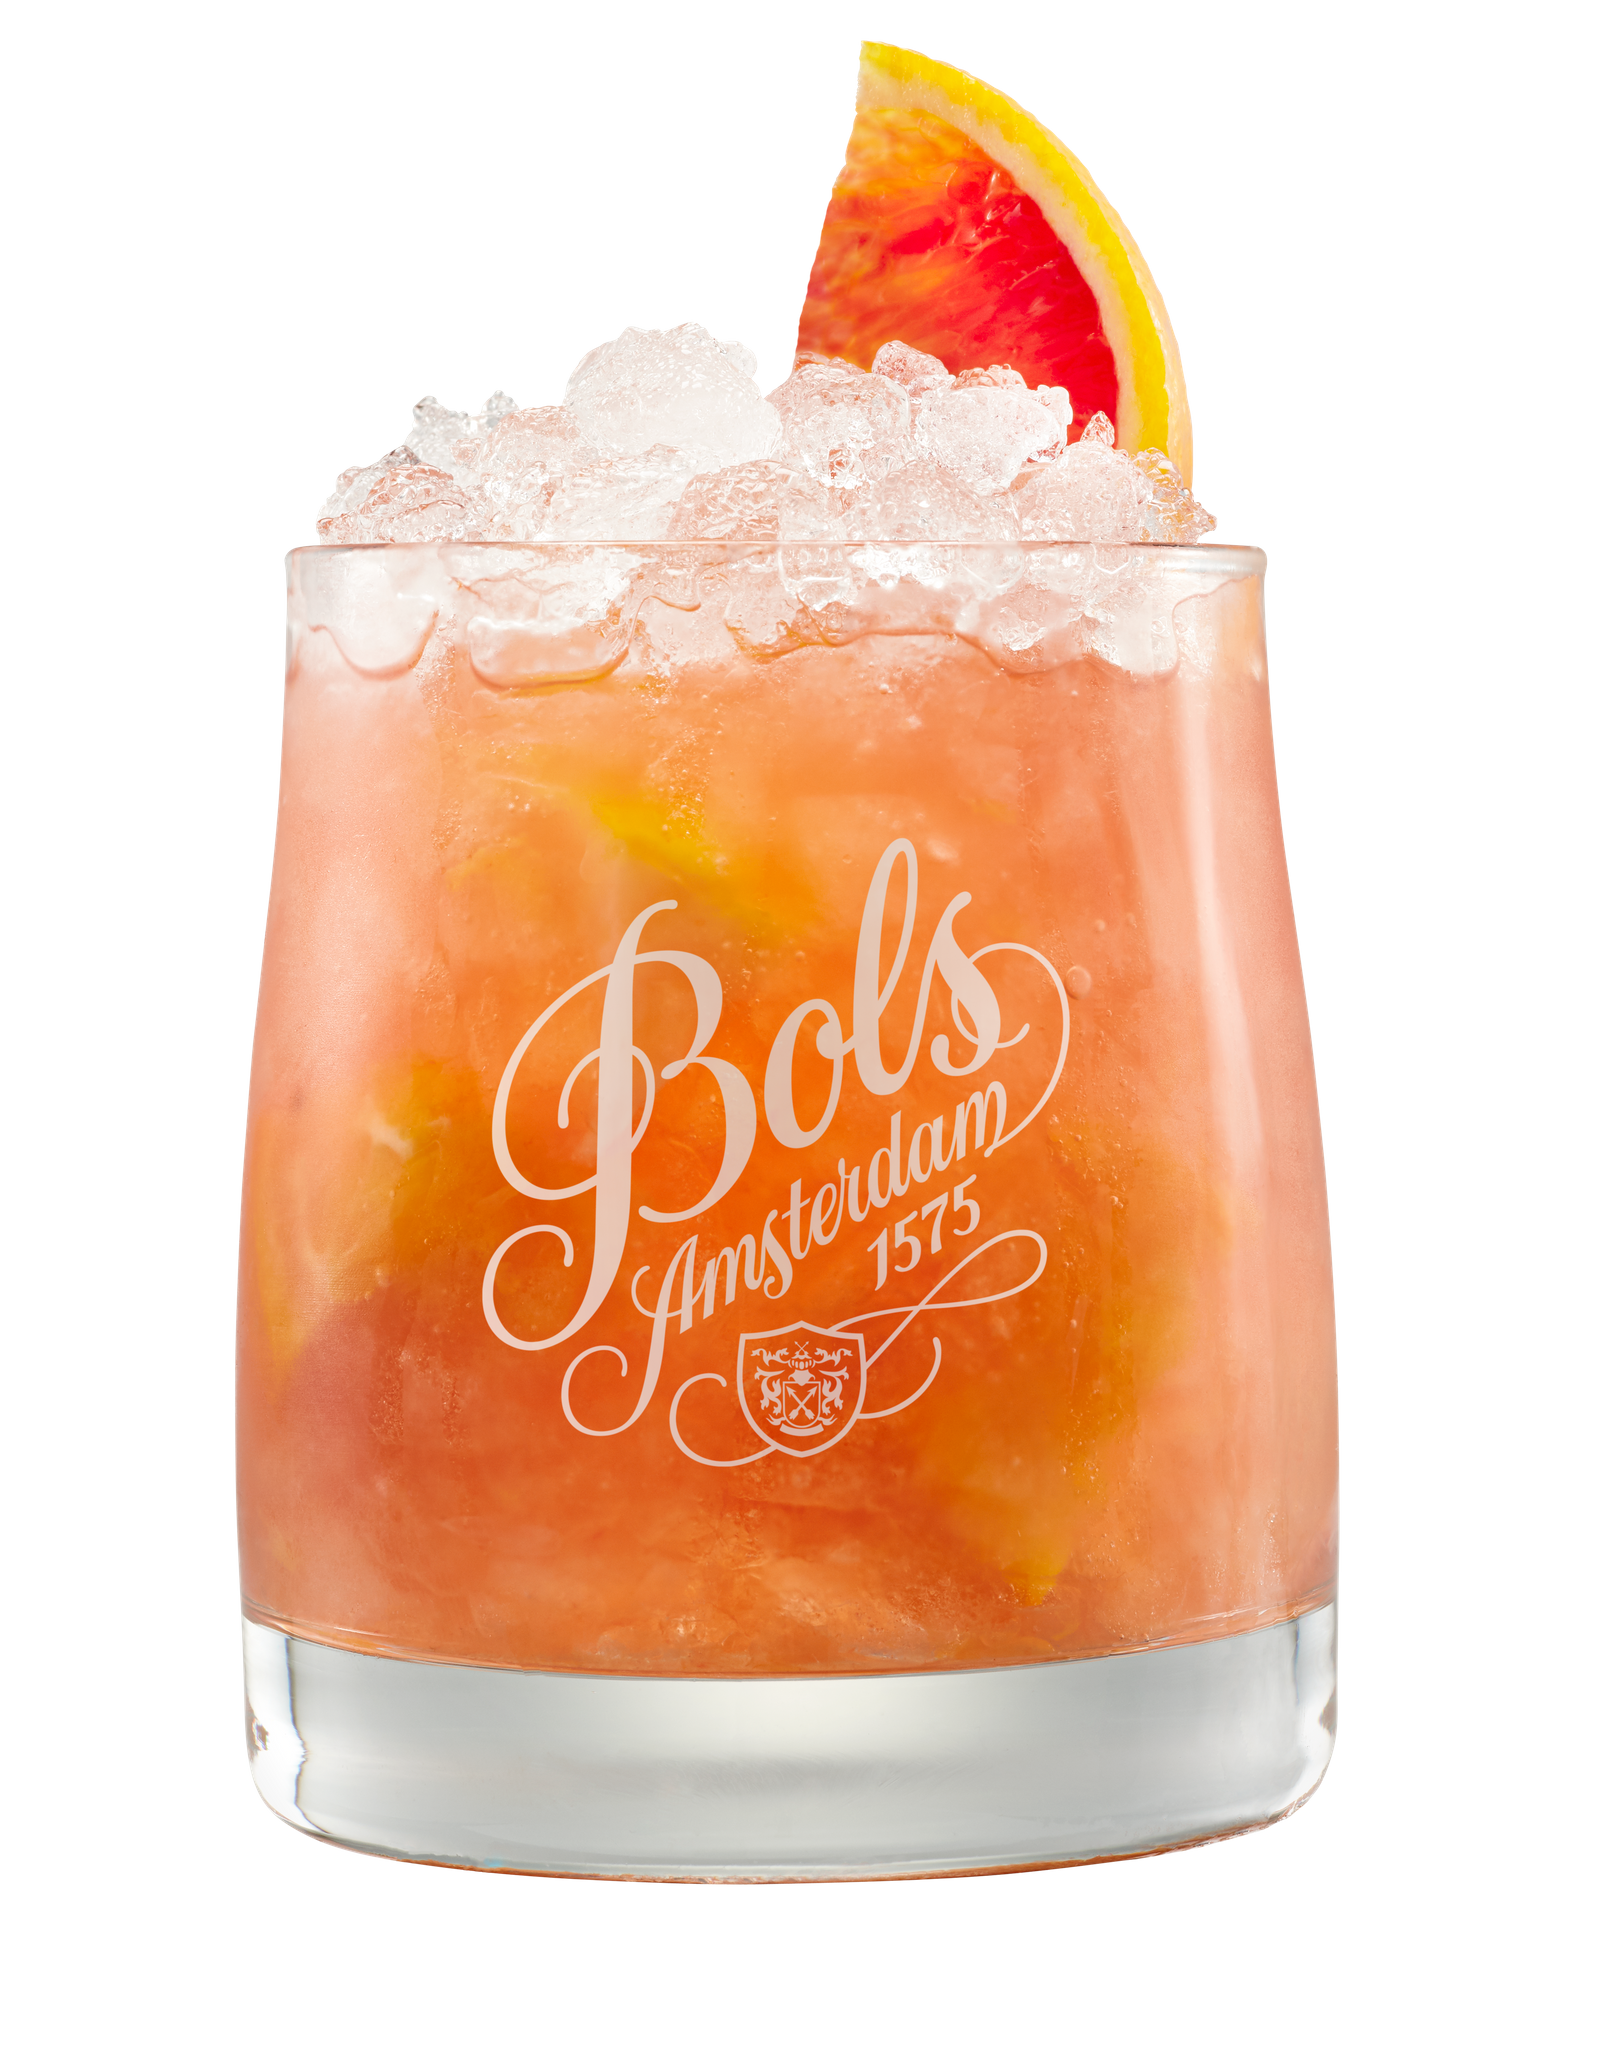 Gavmild jomfru Jolly Blood Red Orange Cocktail Recipe | Bols